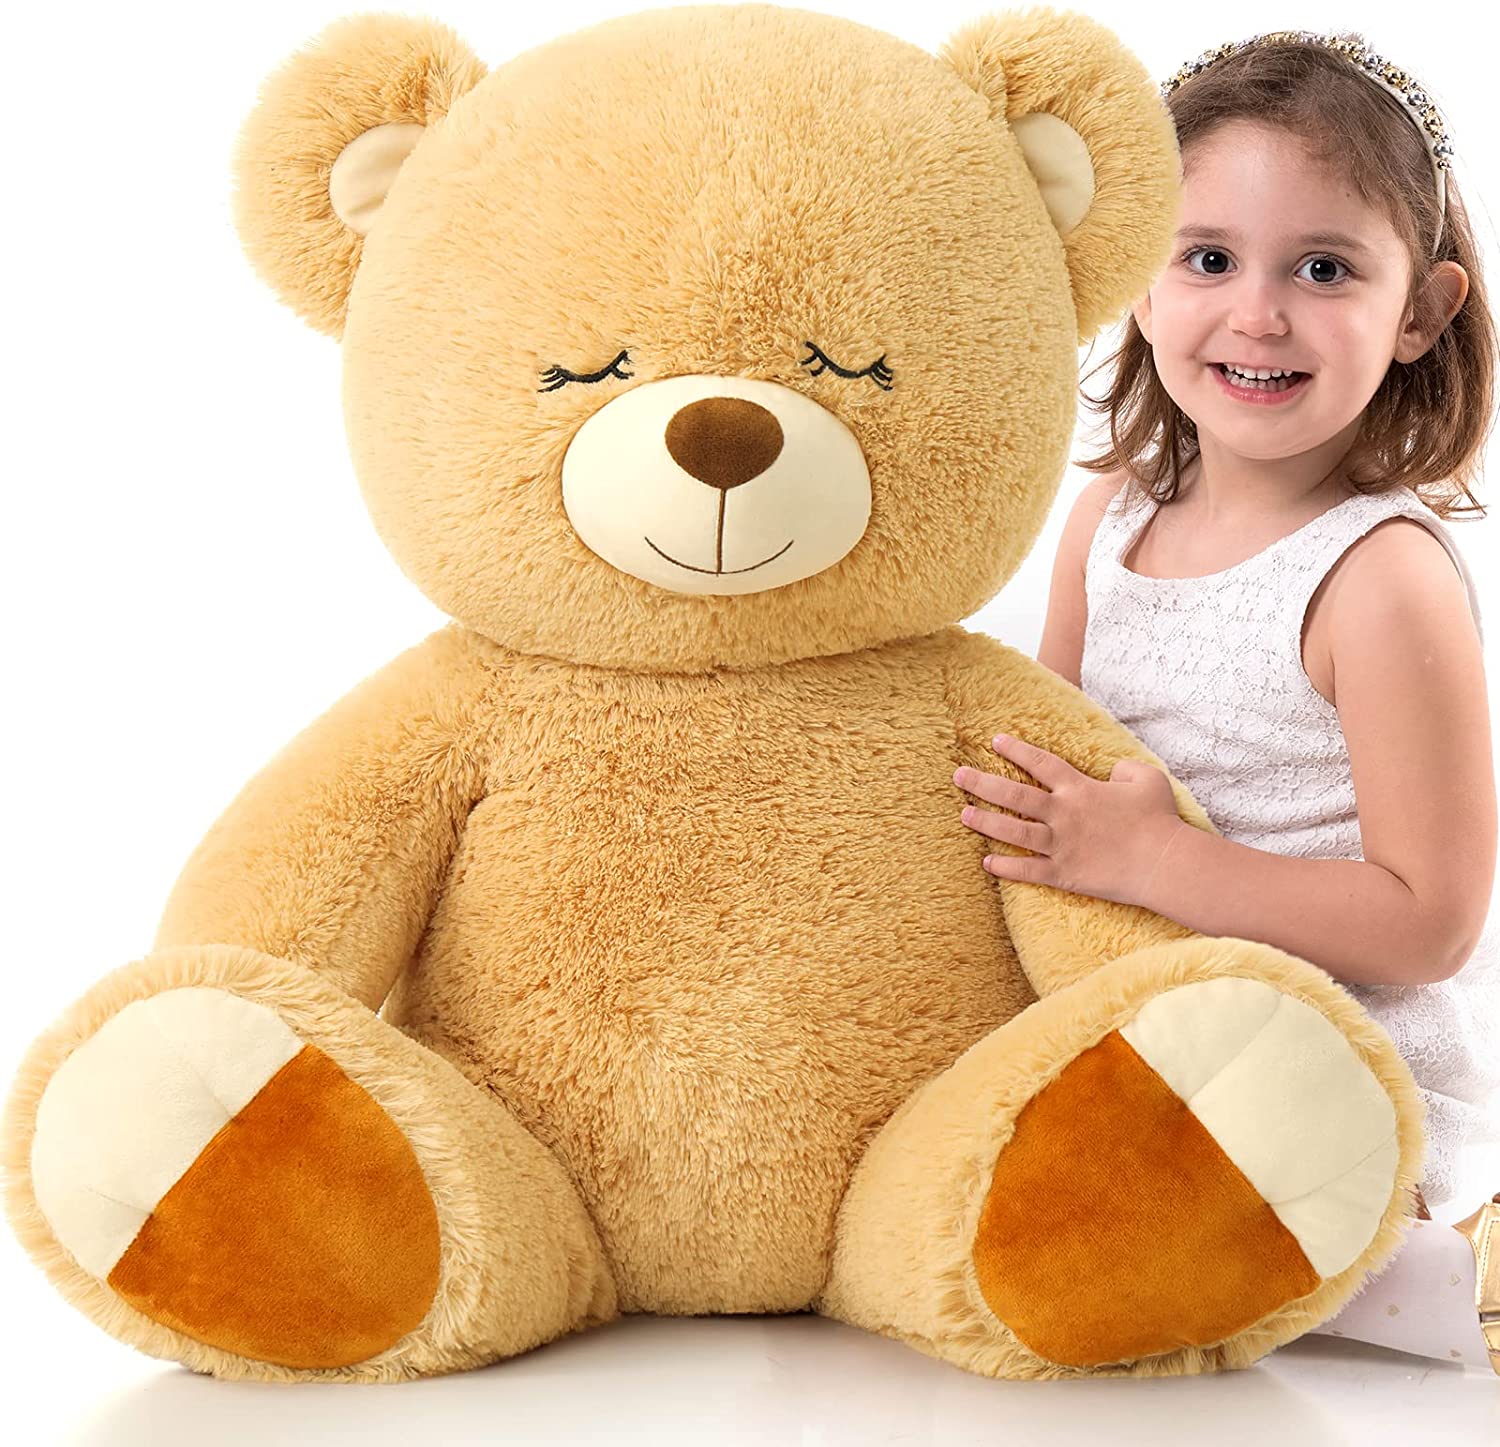 Teddy Bear Stuffed Animal, Pink/Brown, 23.6 Inches